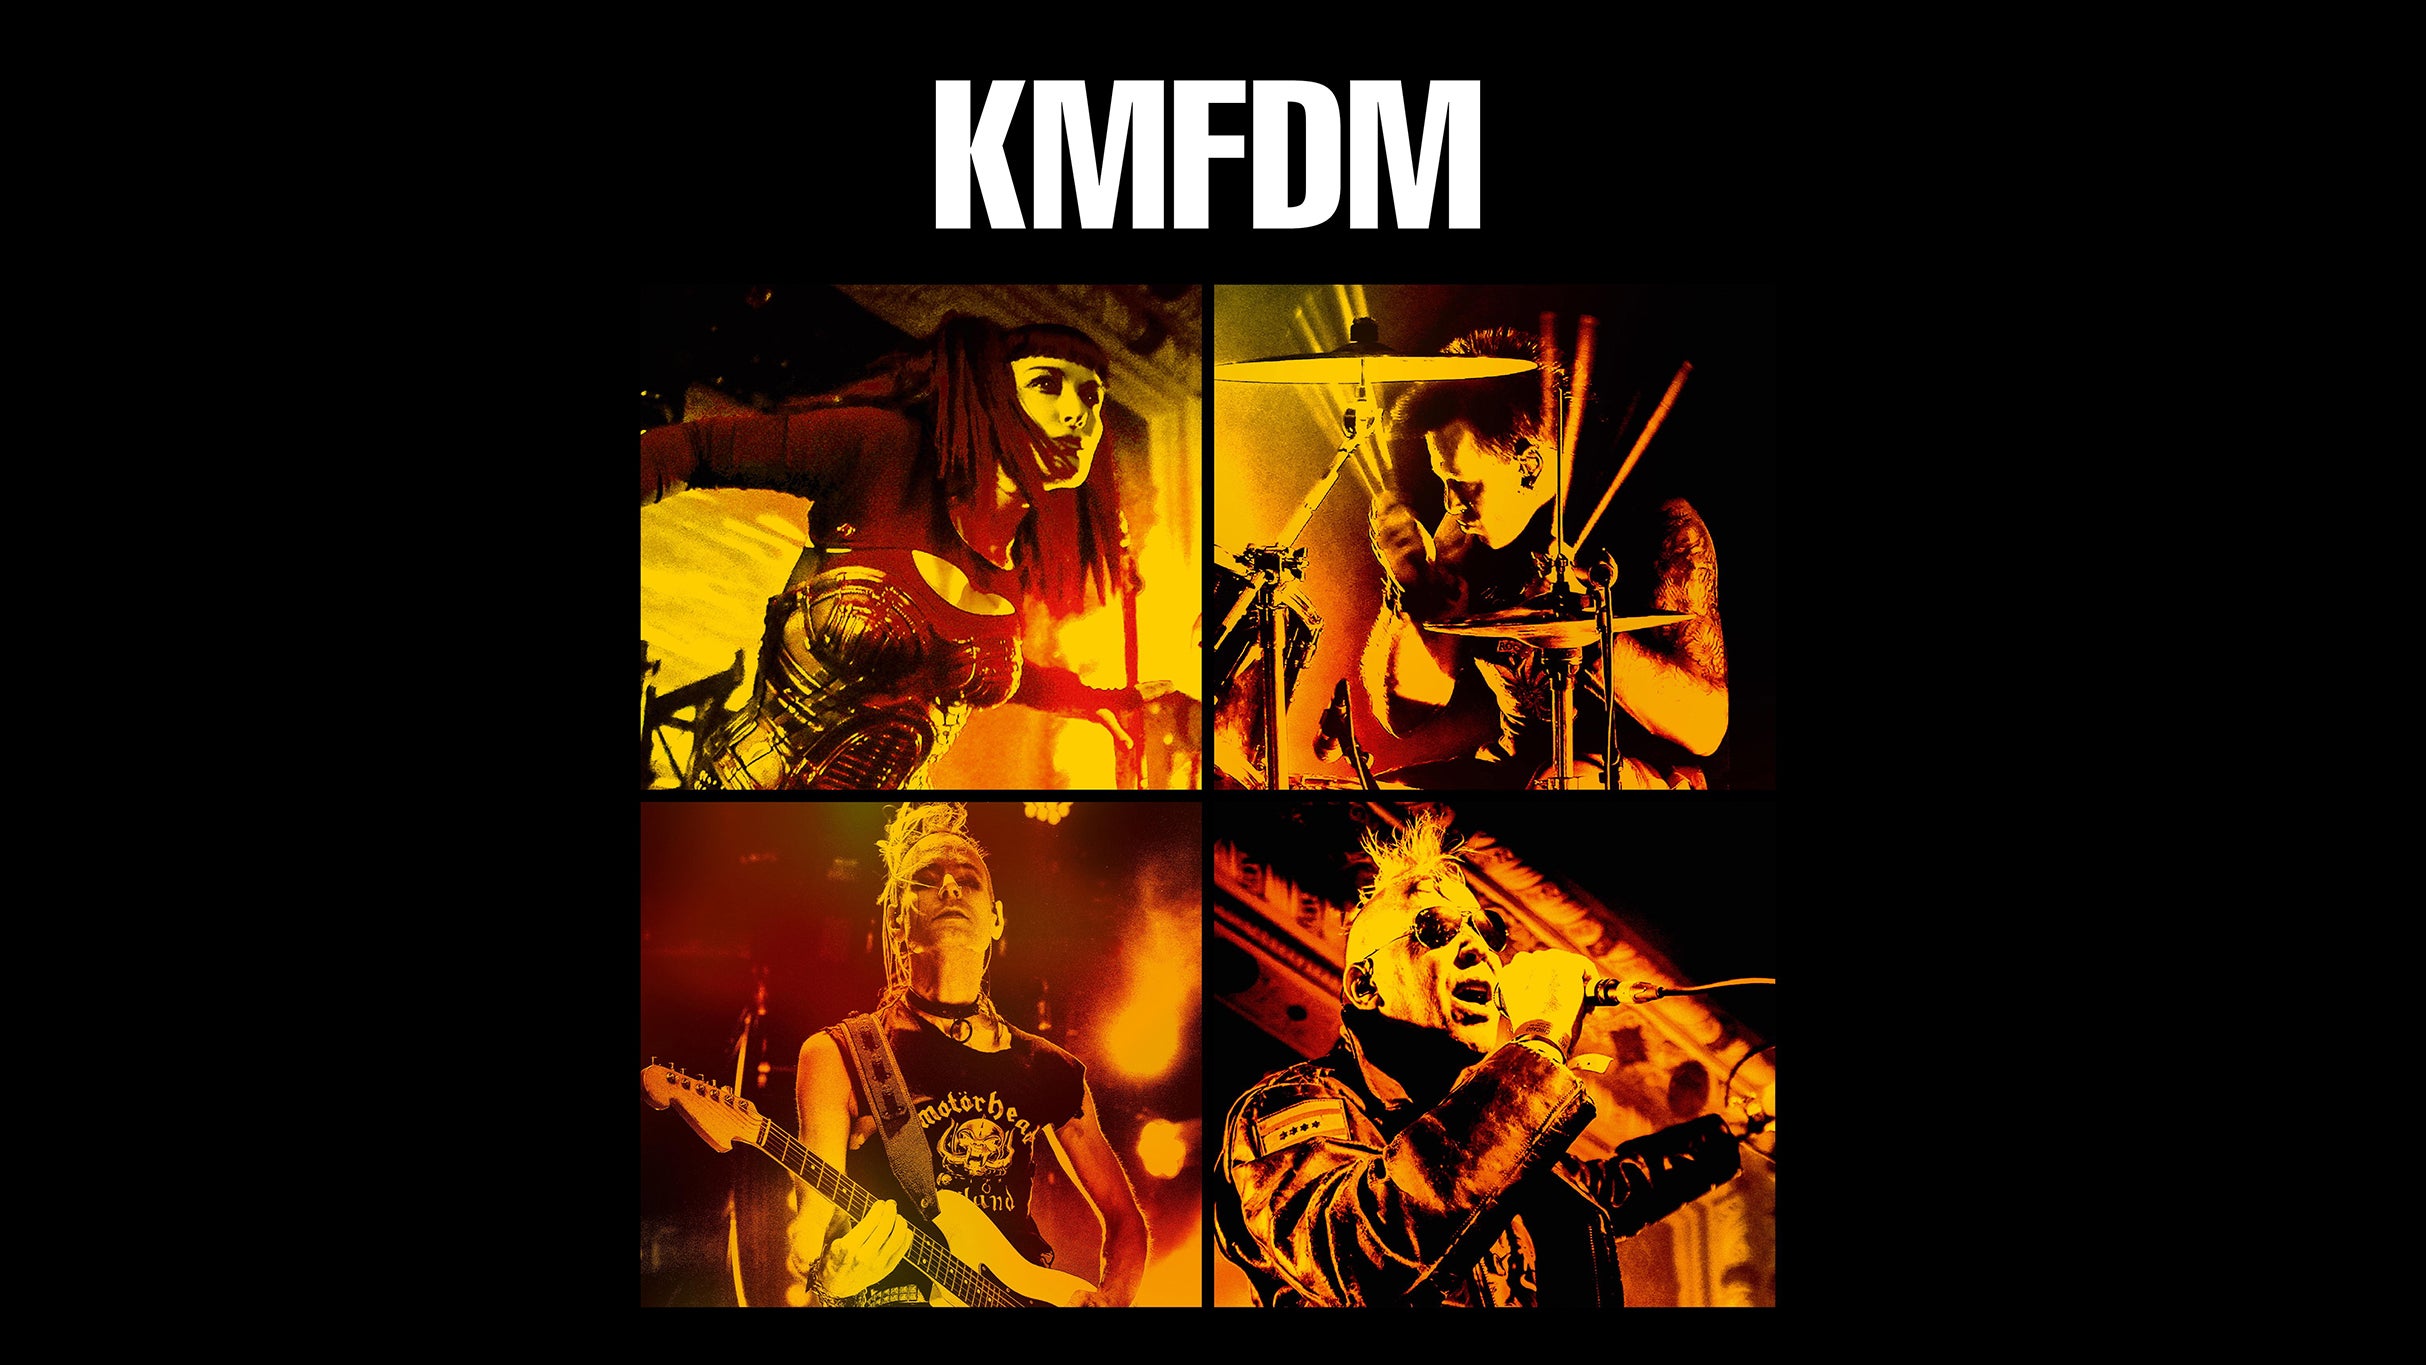 KMFDM in New York promo photo for Ticketmaster presale offer code